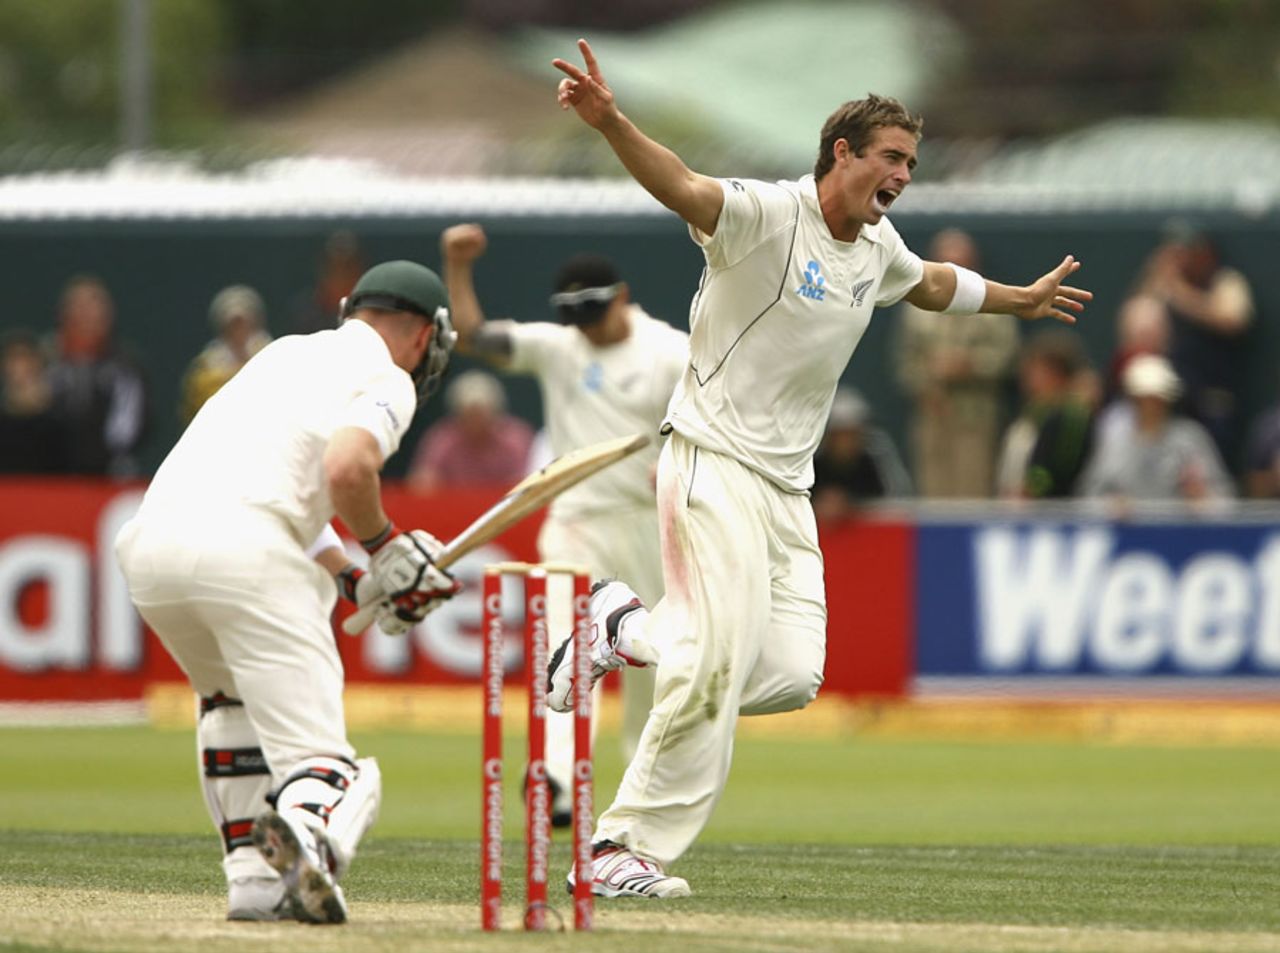 Tim Southee is thrilled after dismissing Brad Haddin, Australia v New Zealand, 2nd Test, Hobart, 4th day, December 12 2011